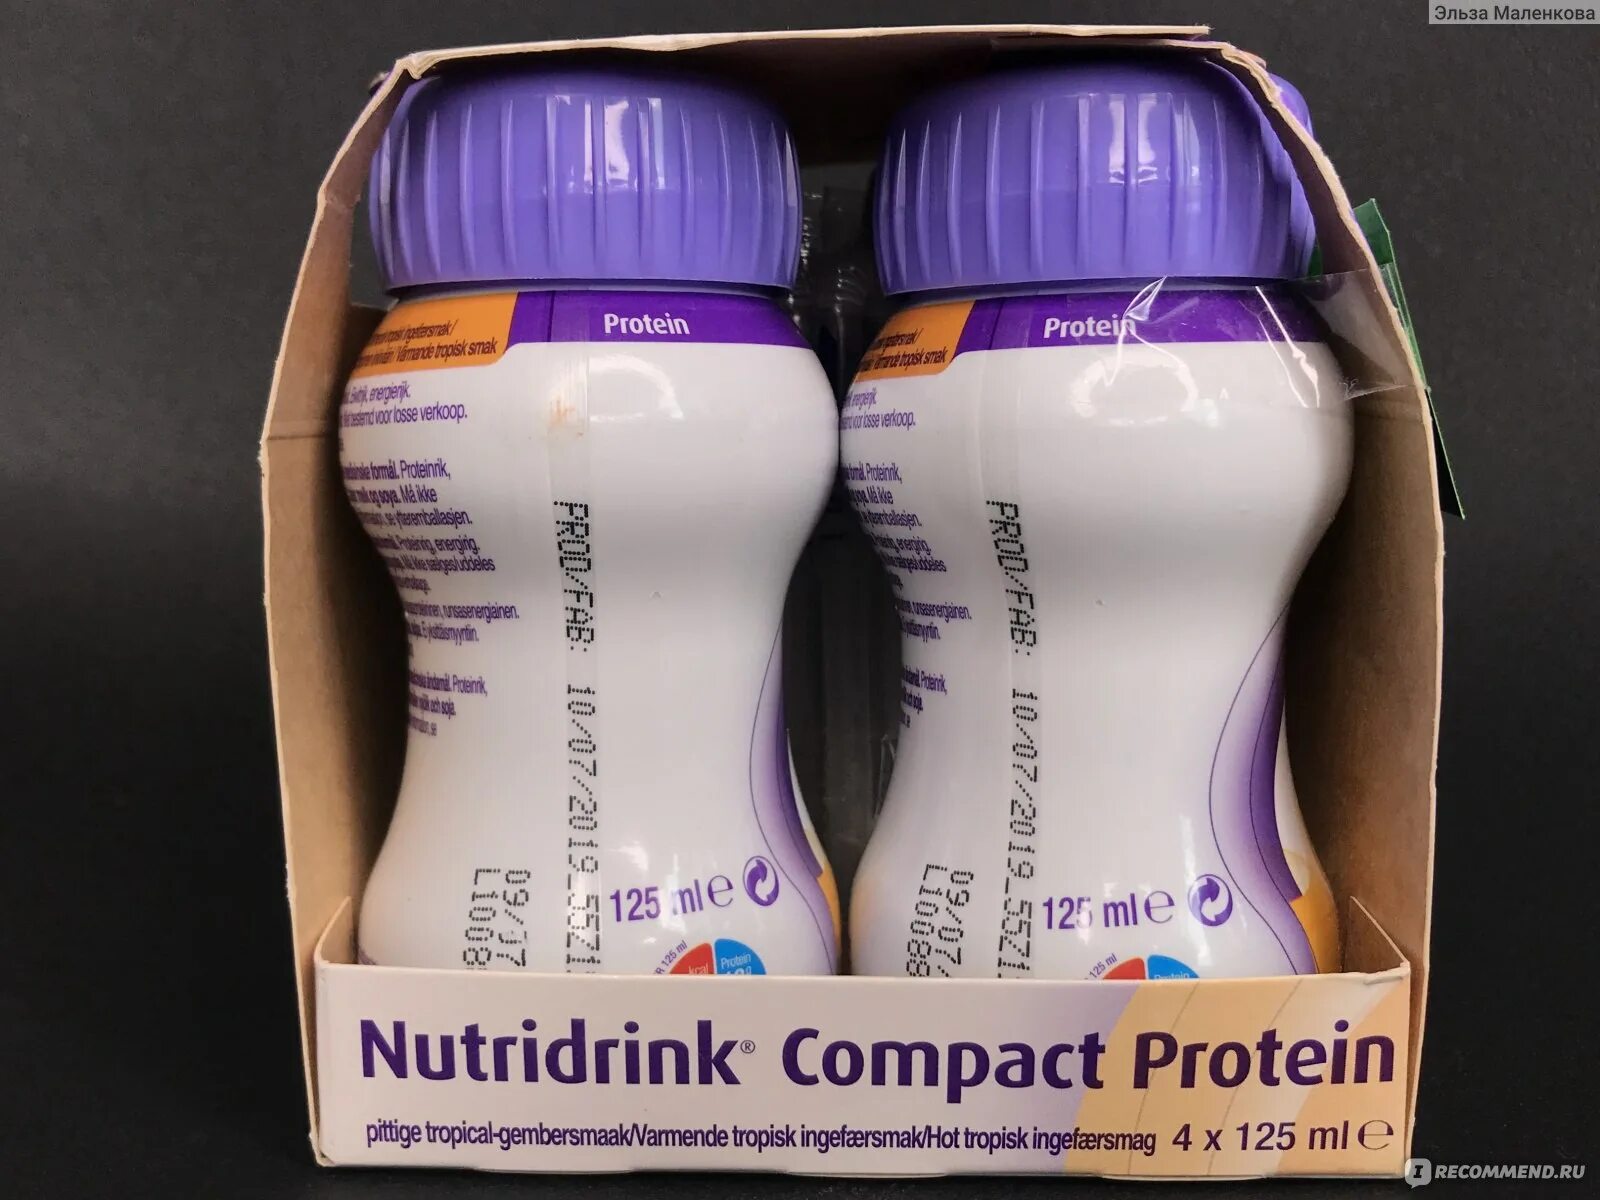 Nutridrink compact protein отзывы. Нутридринк компакт протеин аналог. Нутридринк компакт протеин состав. Нутридринк банан. Нутридринк компакт протеин фото.